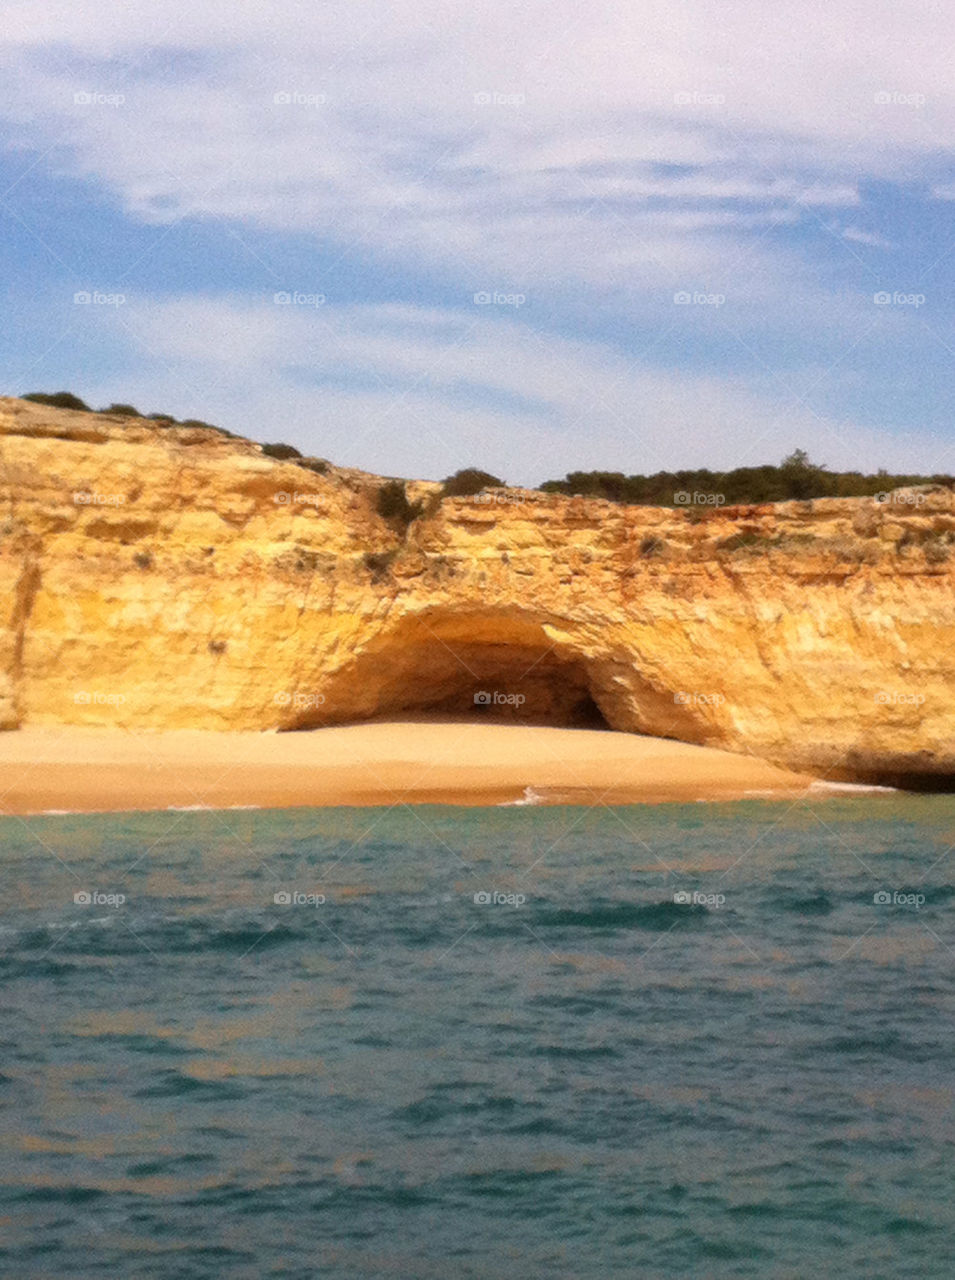 Beach Cave